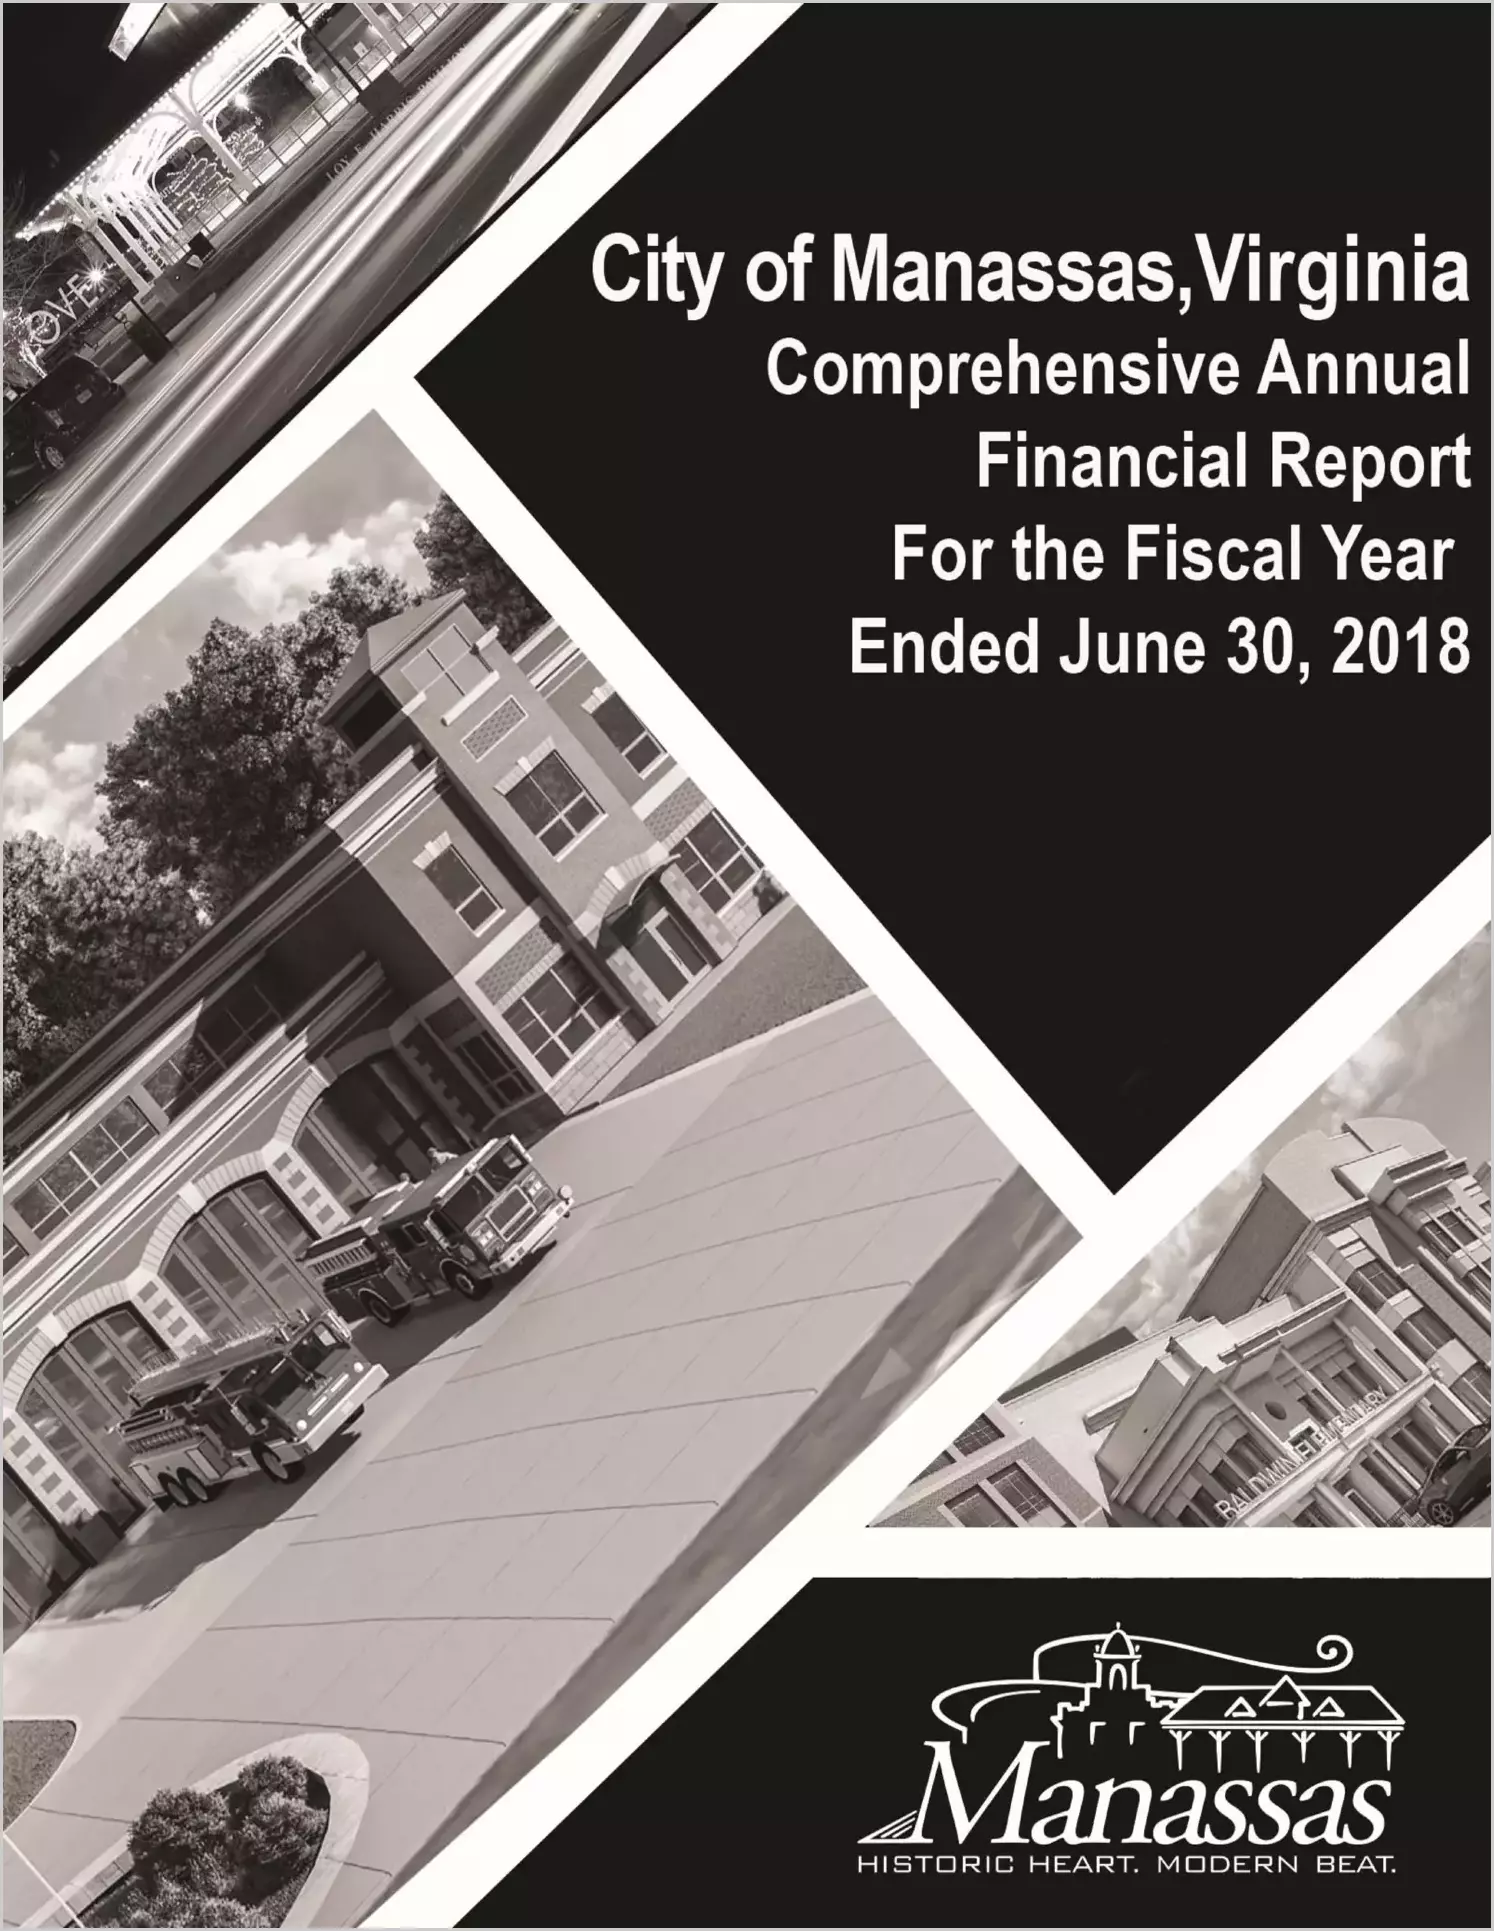 2018 Annual Financial Report for City of Manassas